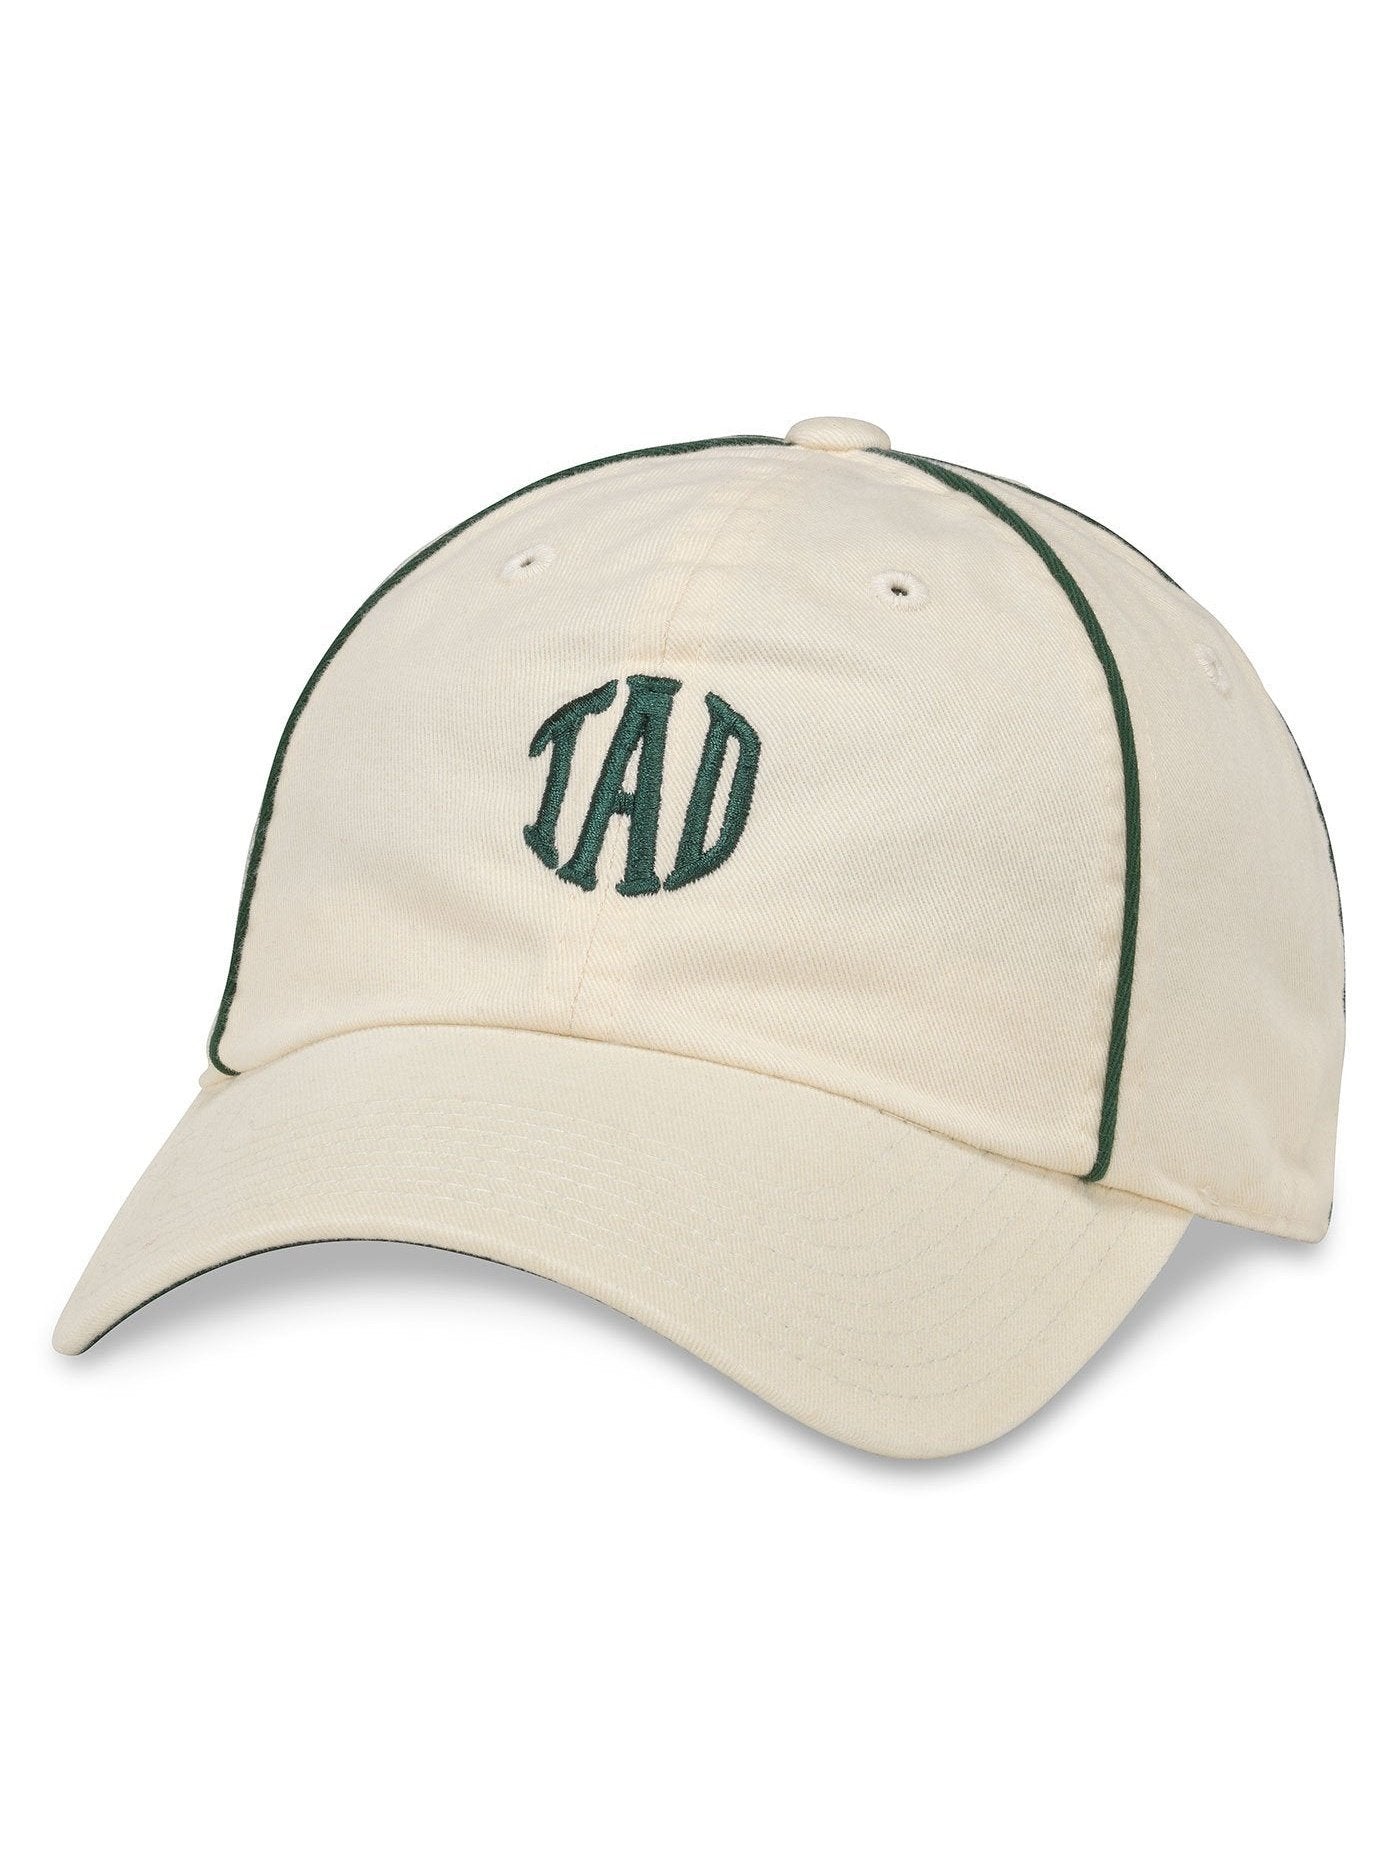 American Needle Tad Davis Cricket Cap Ivory Cane Dark Green TDD-01C.